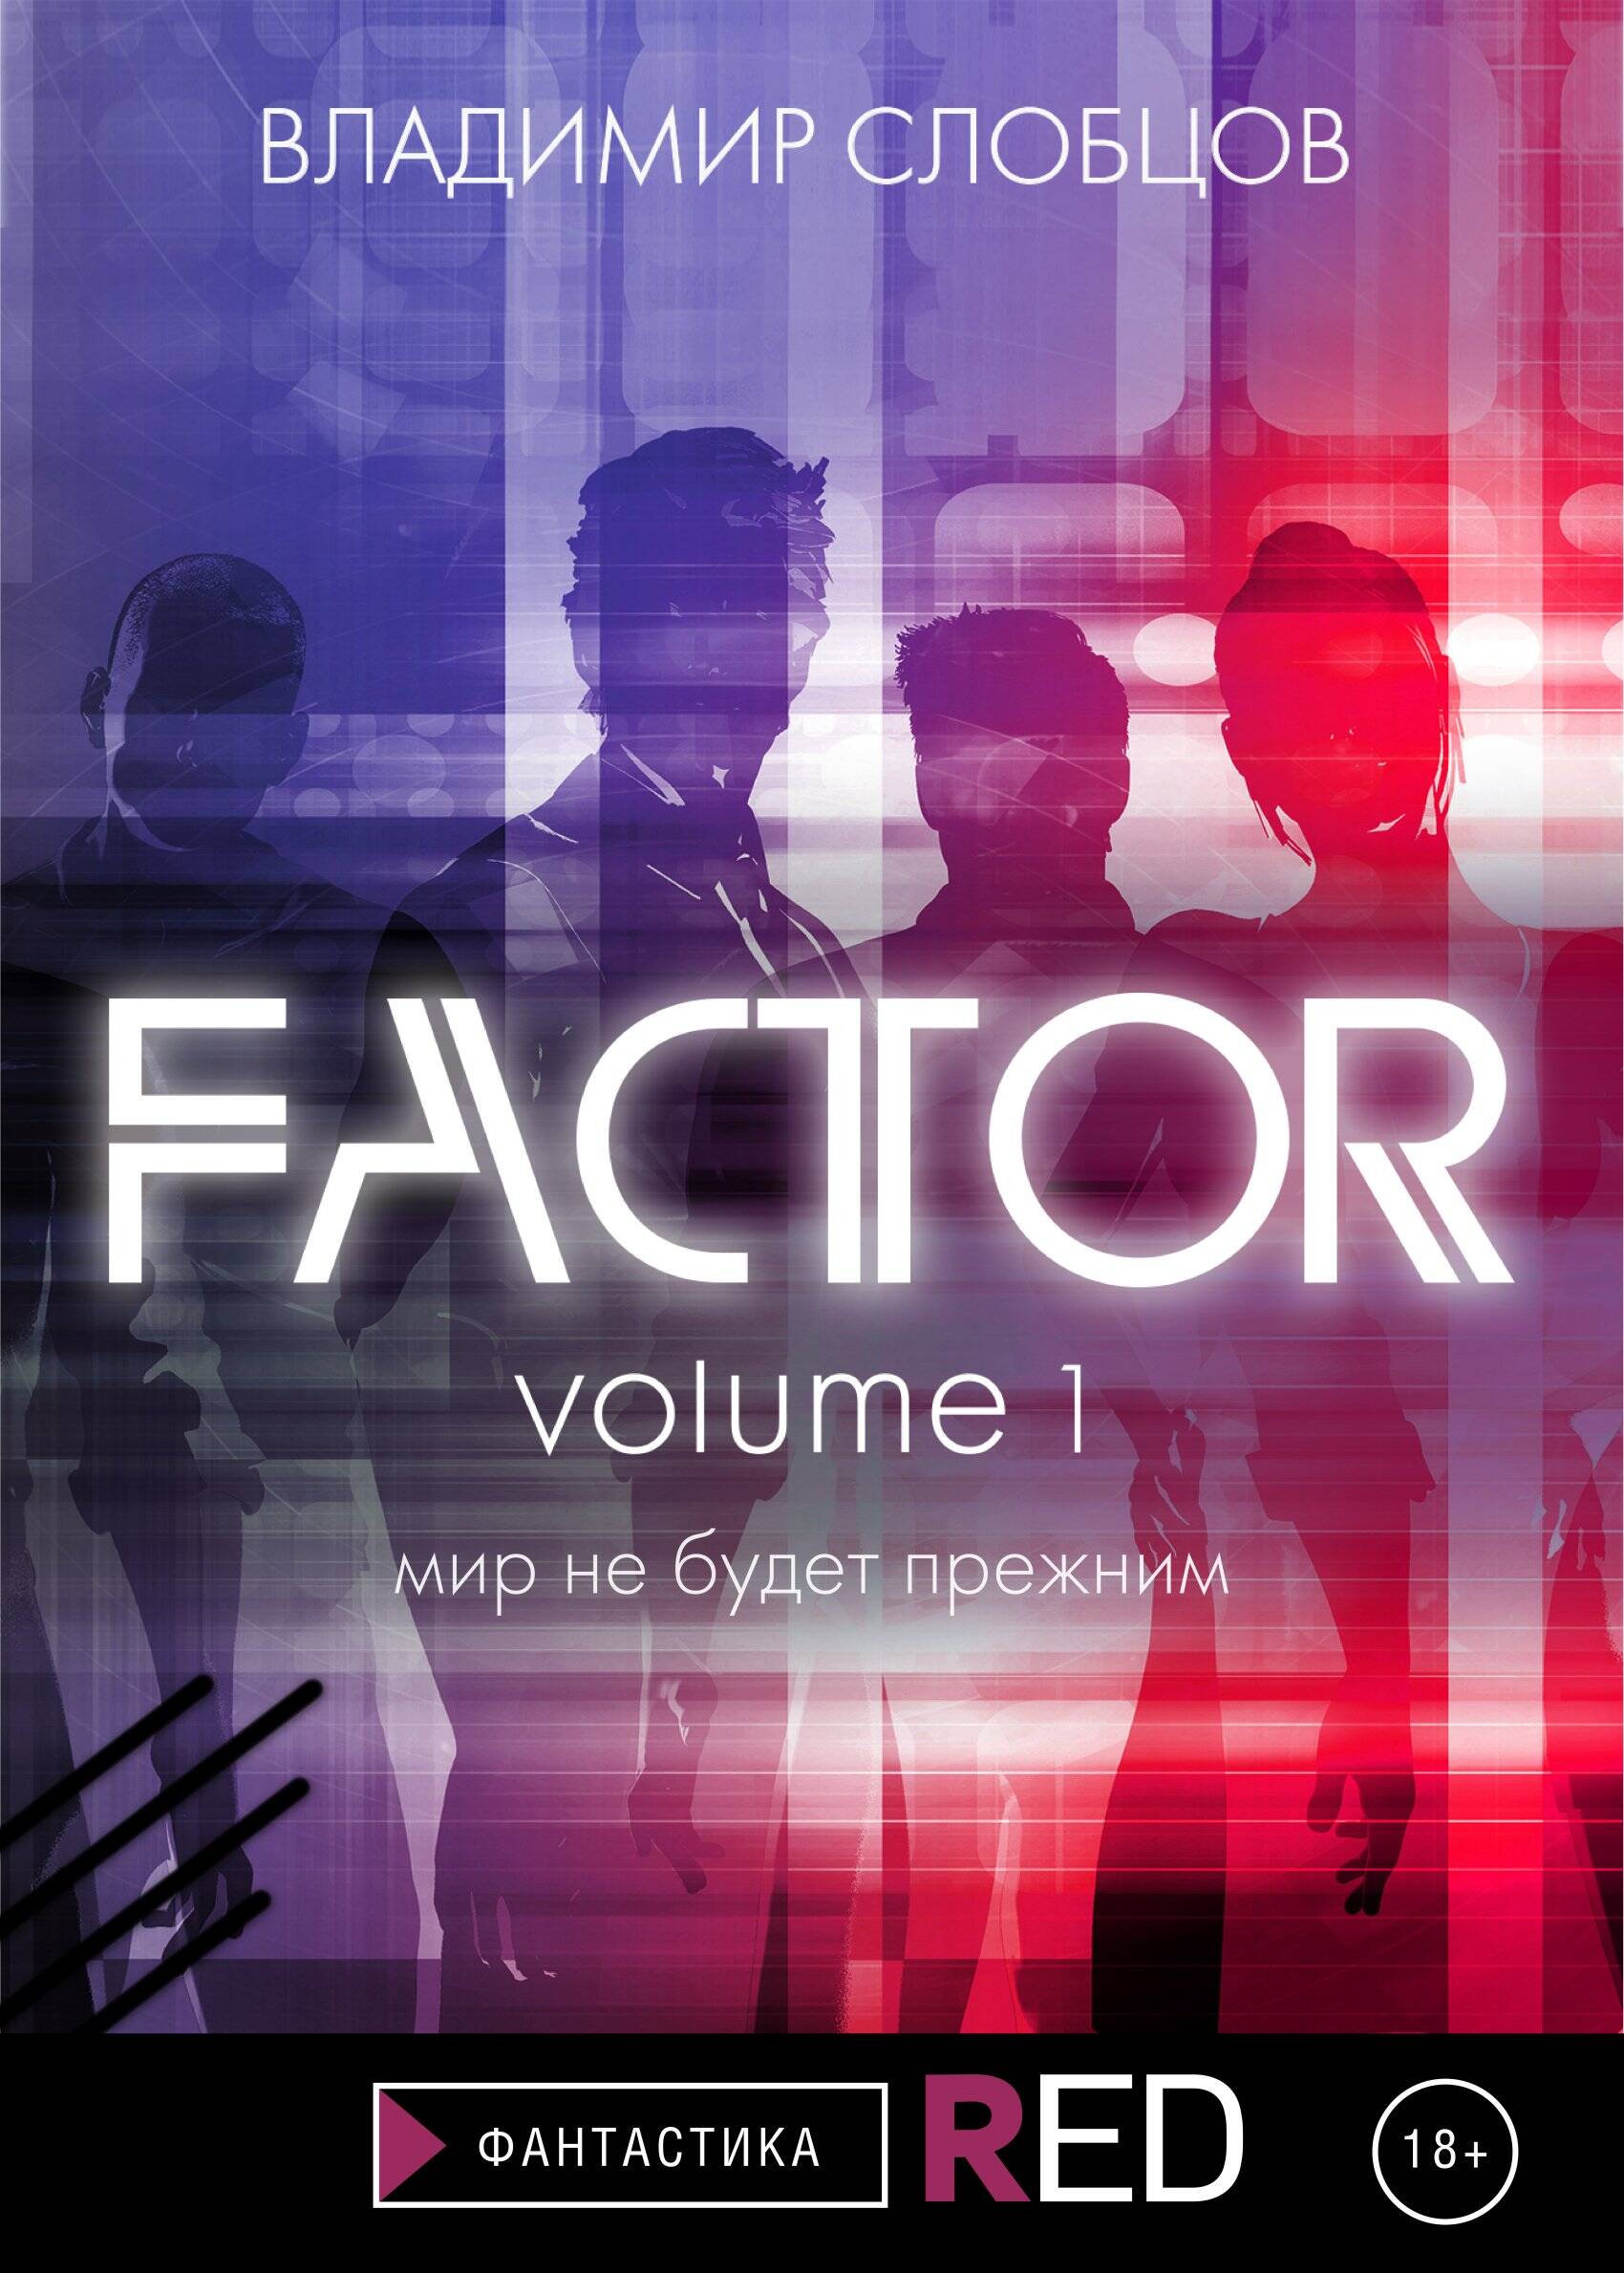 Factor volume 1